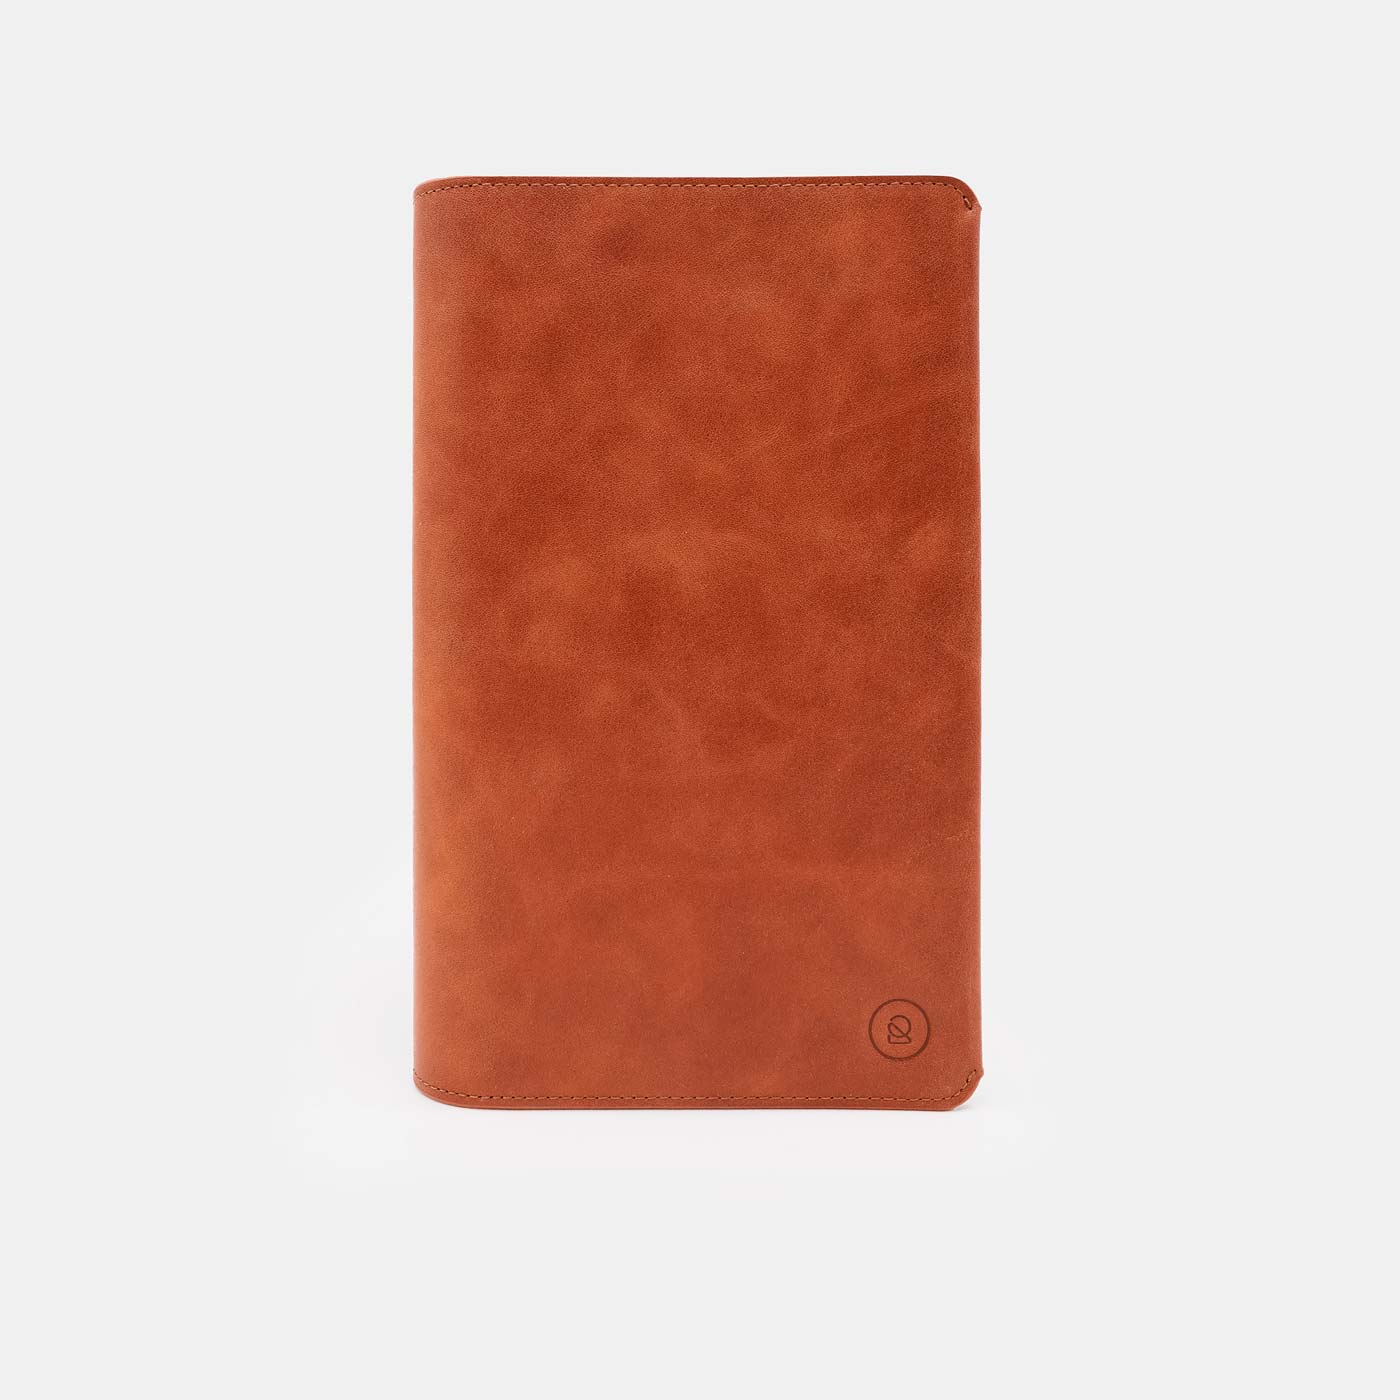 Moleskine Notebook Cover - Saddle Brown - RYAN London